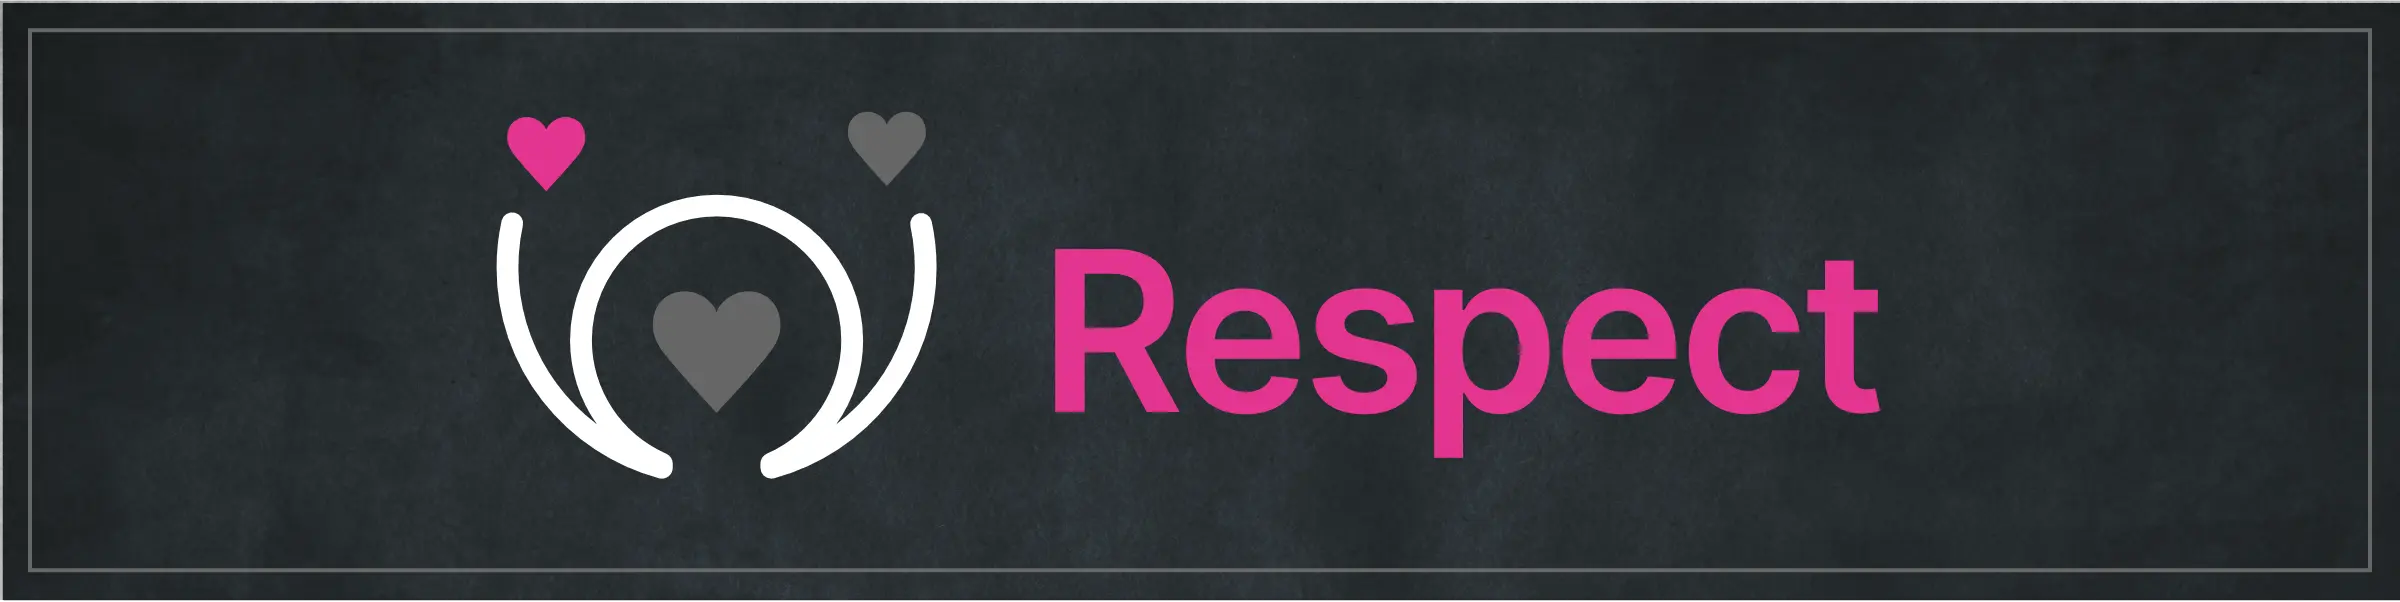 ethicalheart-respect2x.png